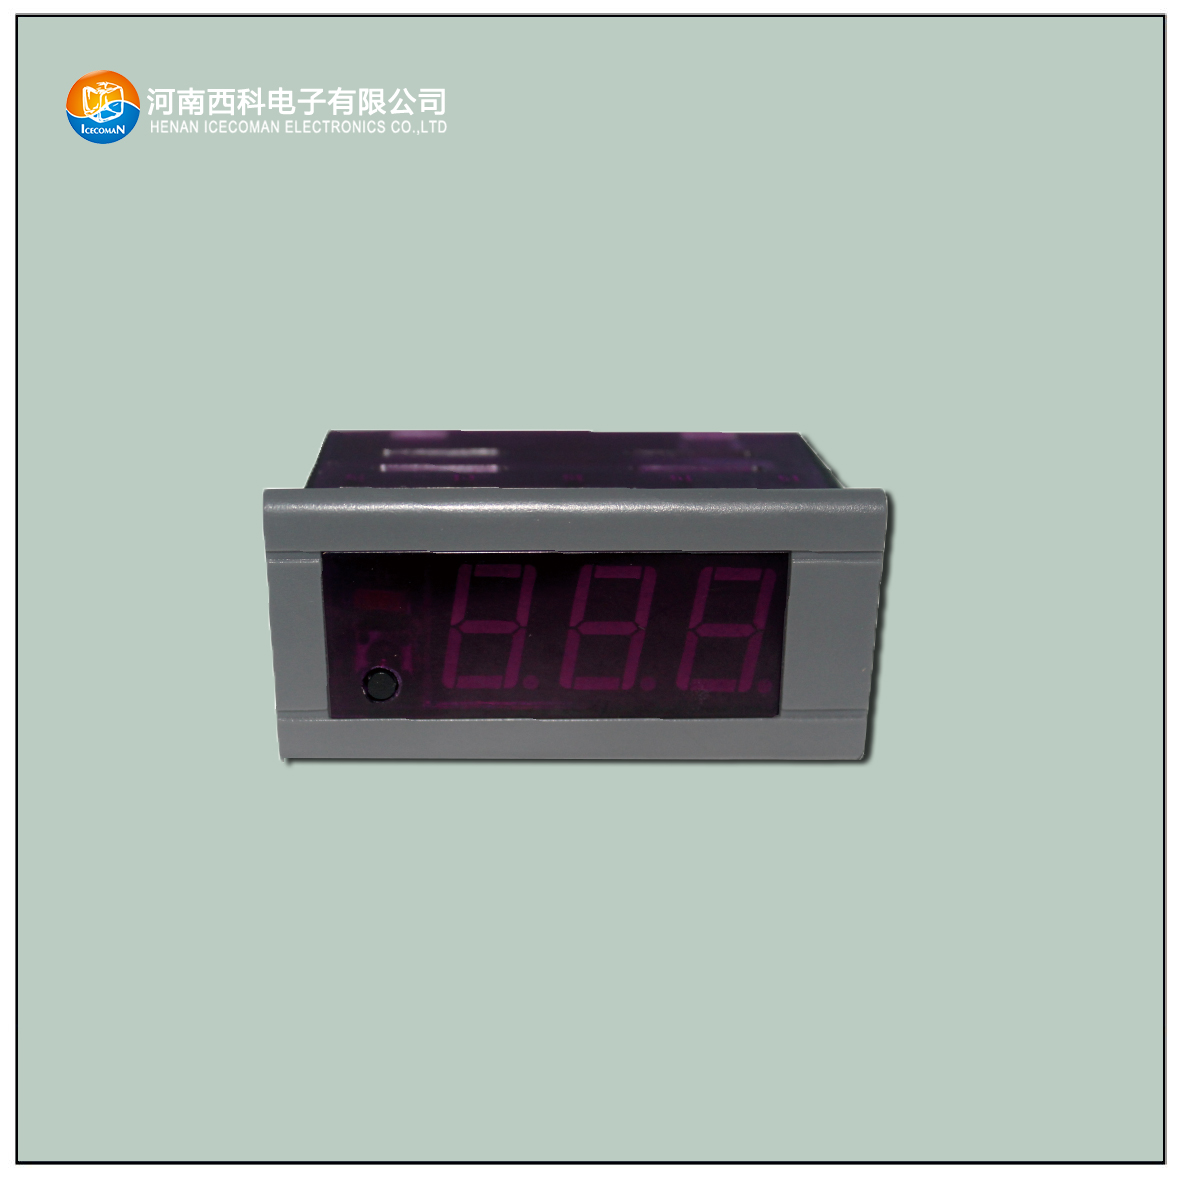 Wkq-smg-b temperature controller